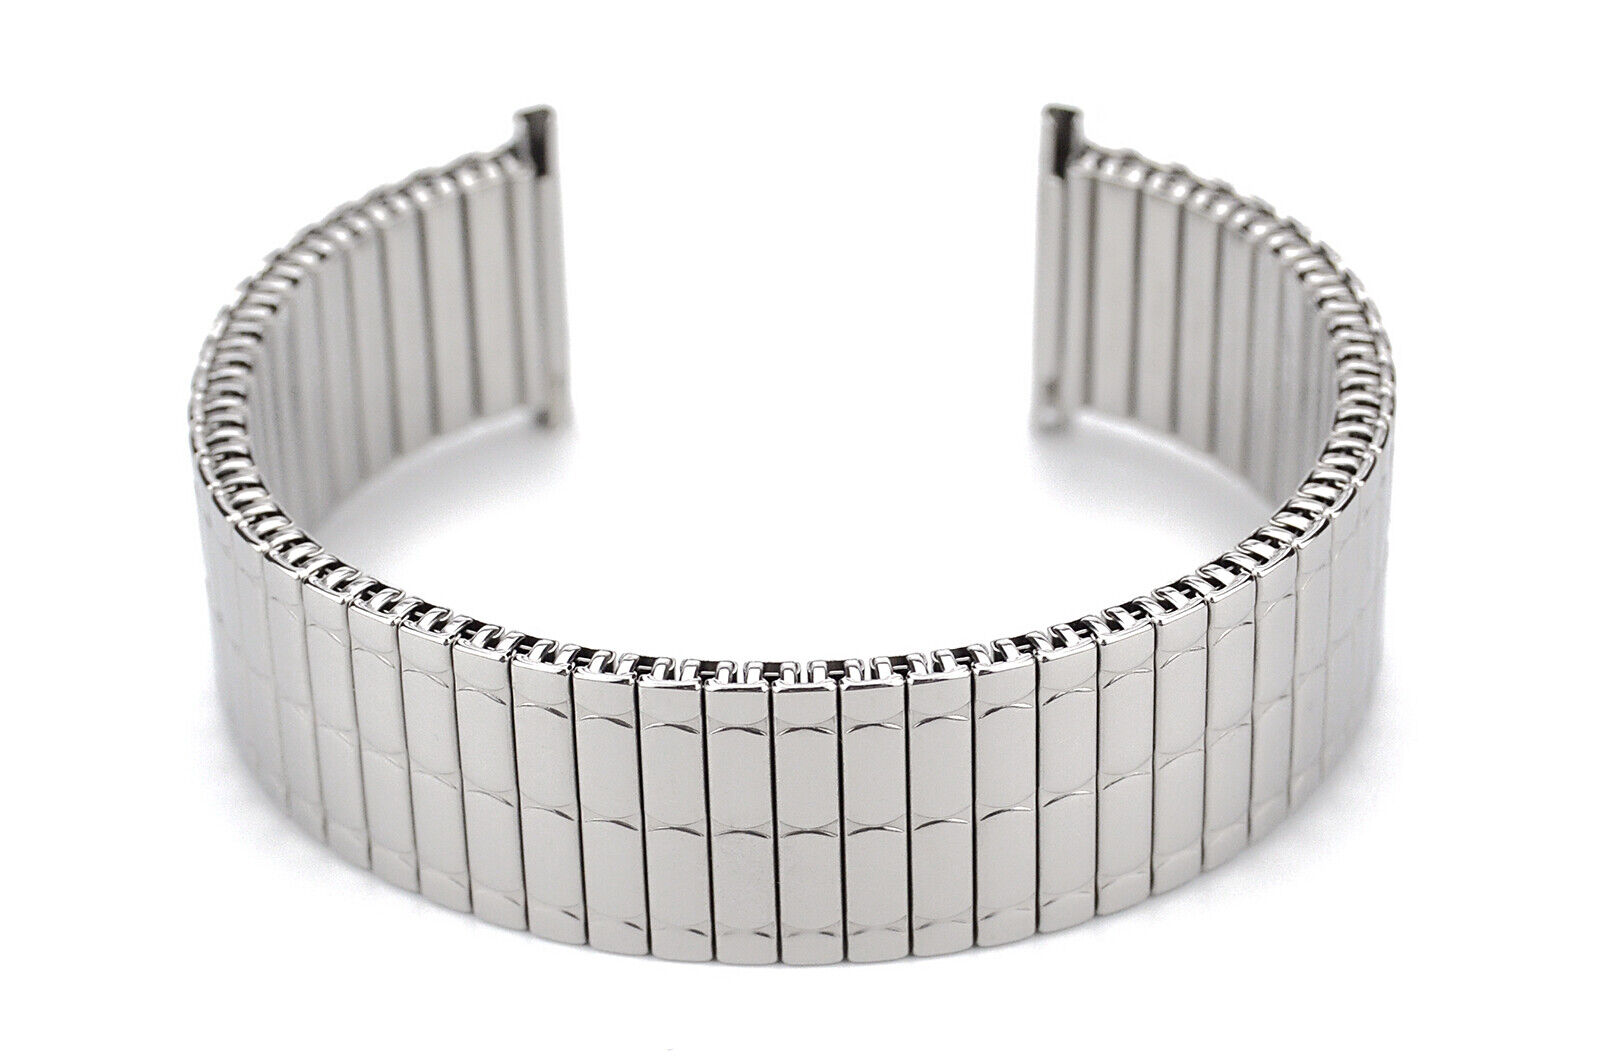 BNIB Rowi Fixoflex S Stainless Steel Watch Bracelet / Strap 22mm Made in Germany